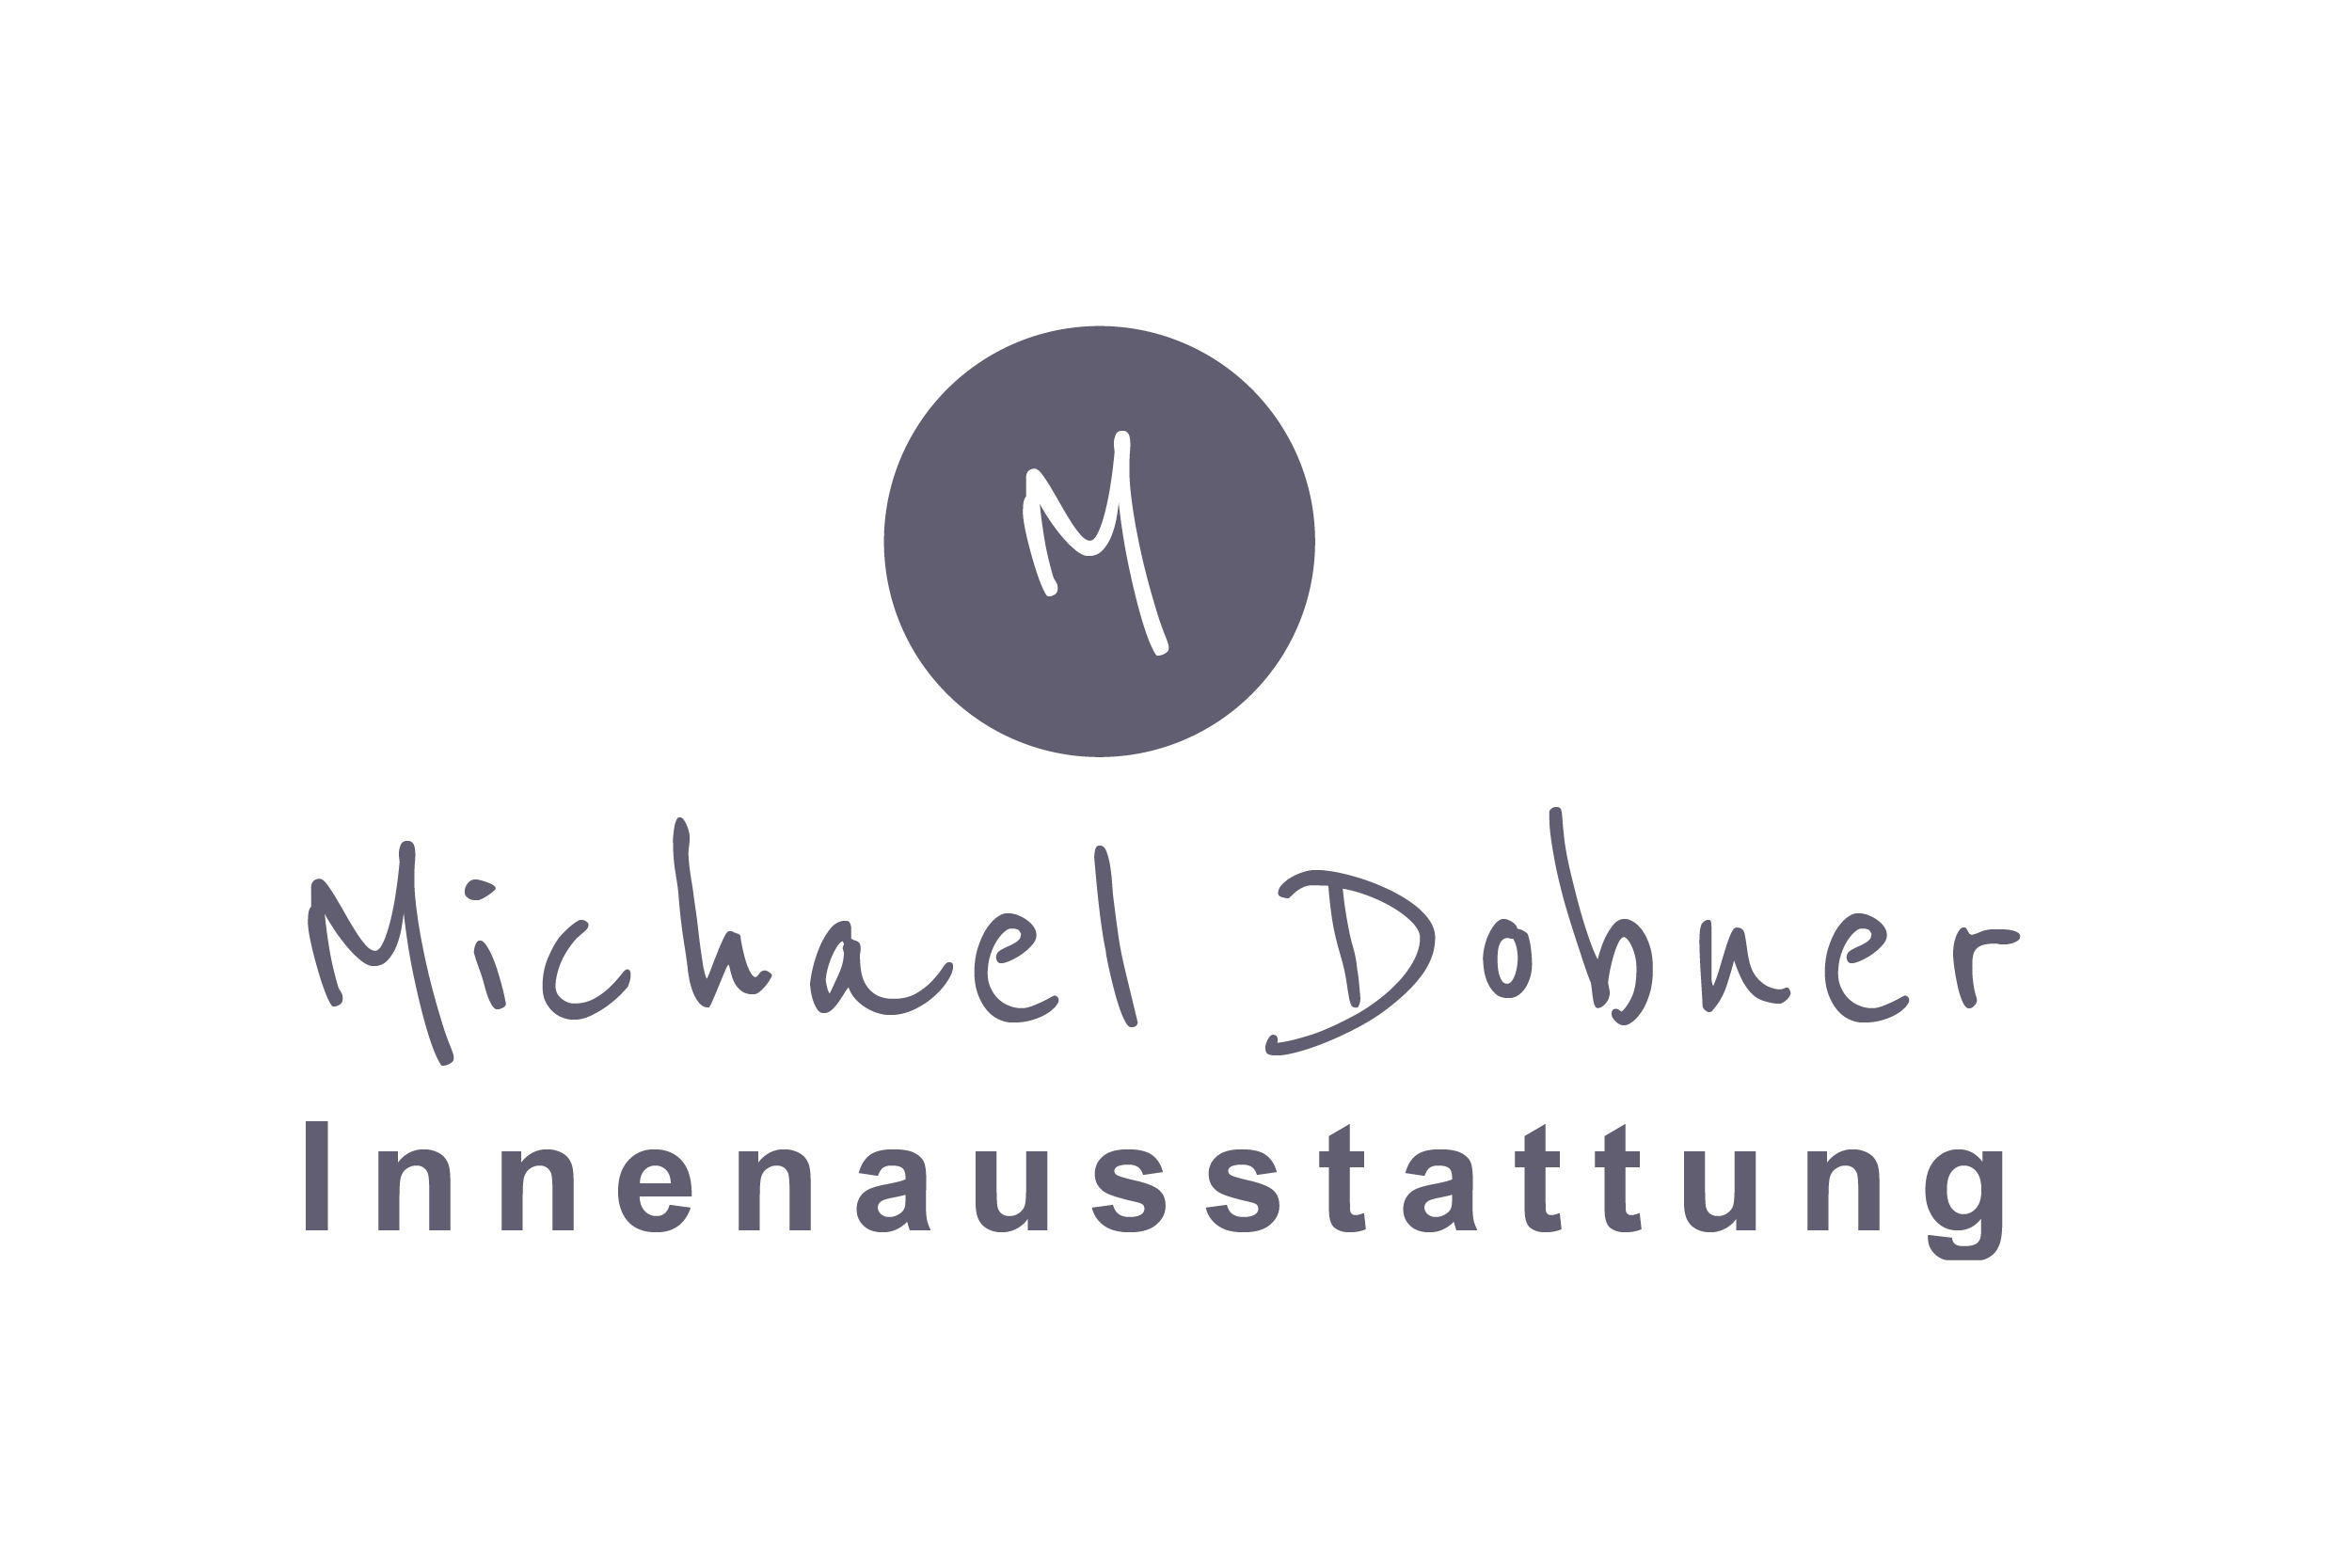 Michael Dobner - Innenausstattung